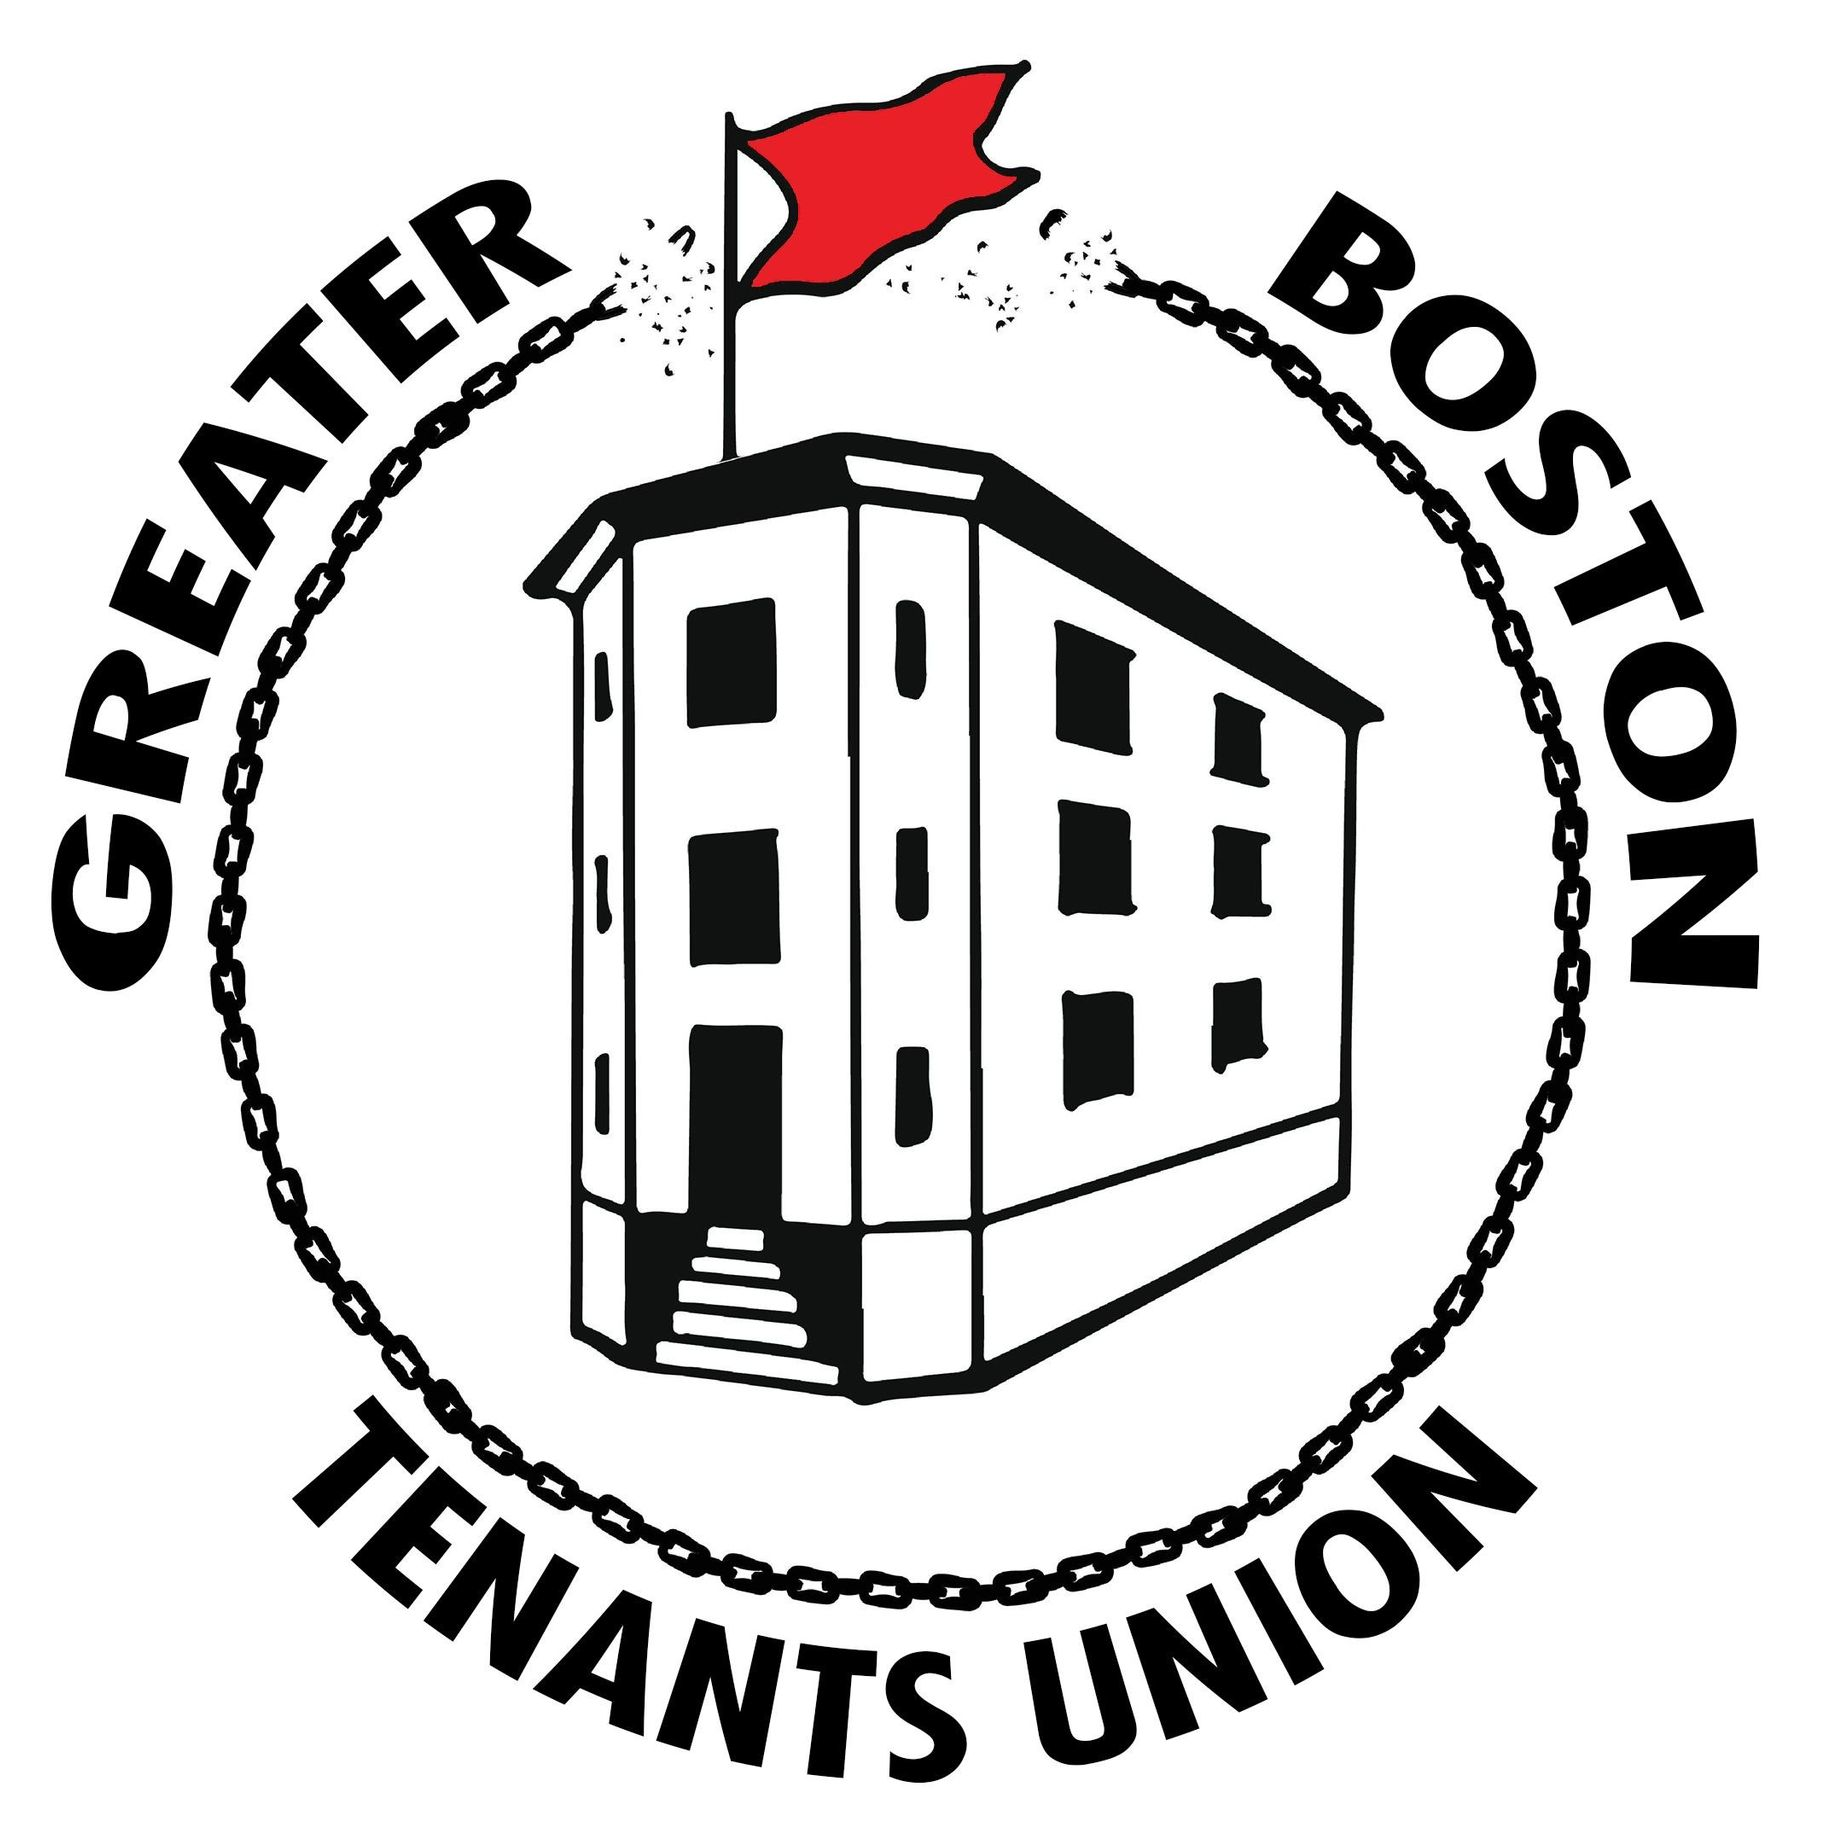 Greater Boston Tenants Union logo